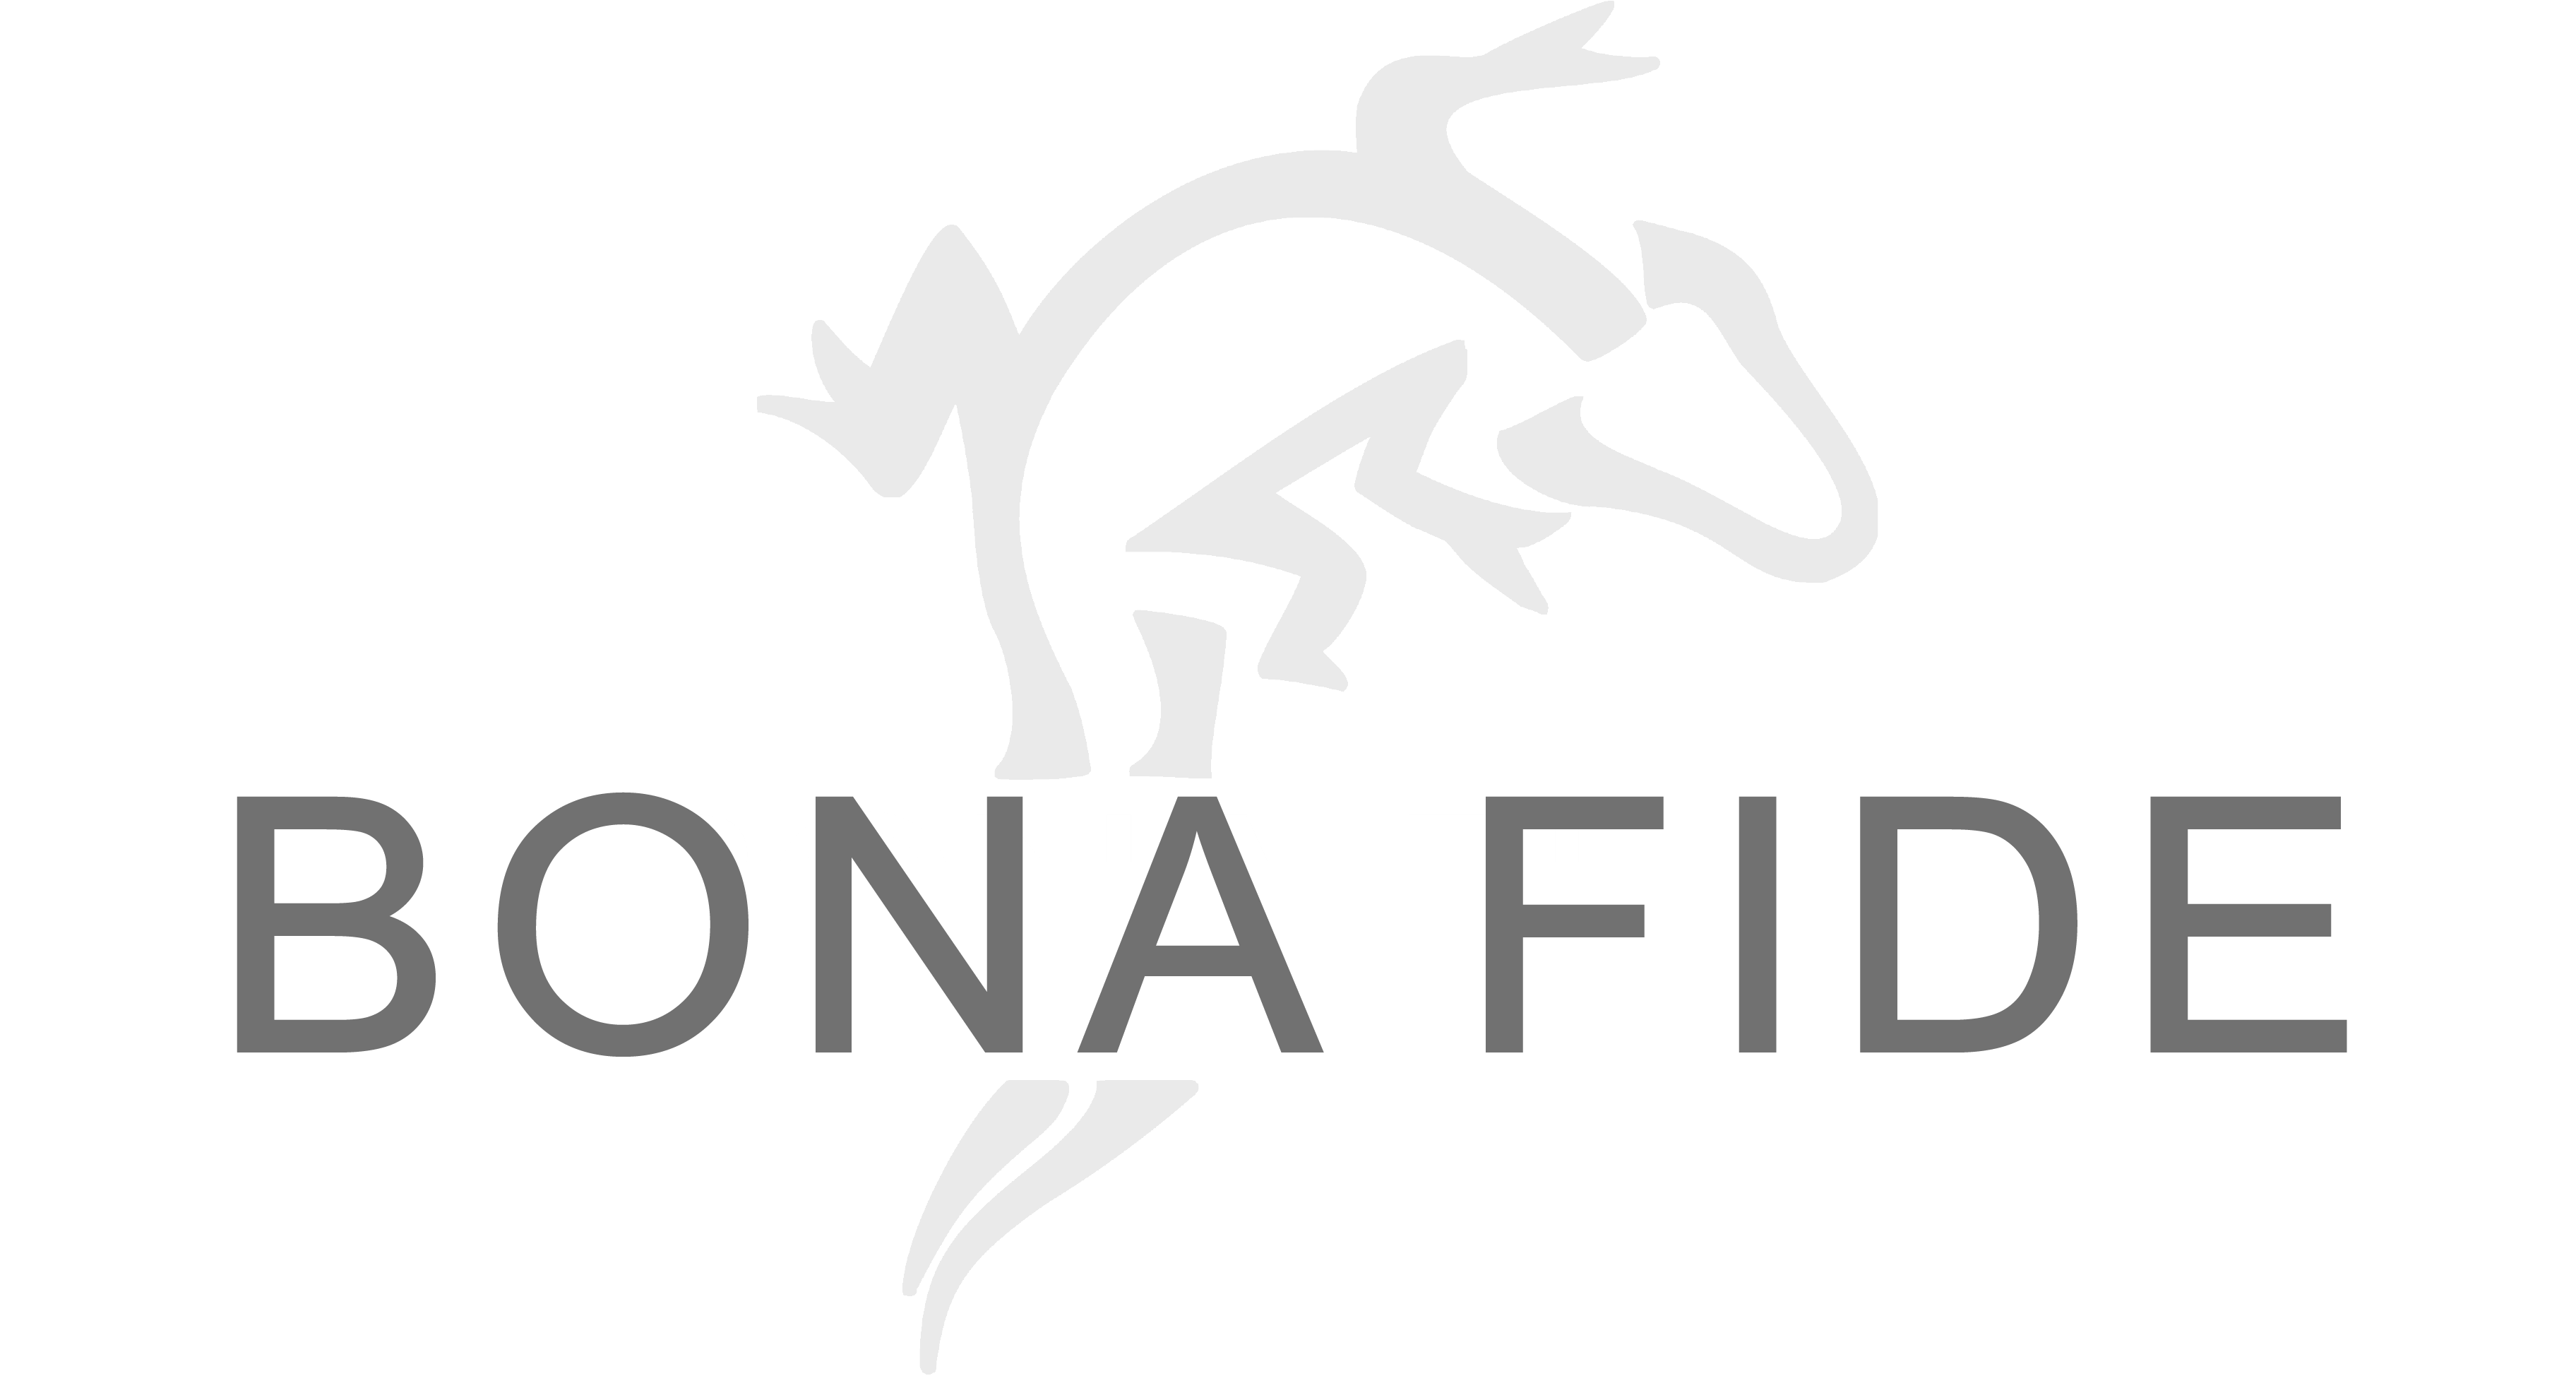 Bona Fide Corporation